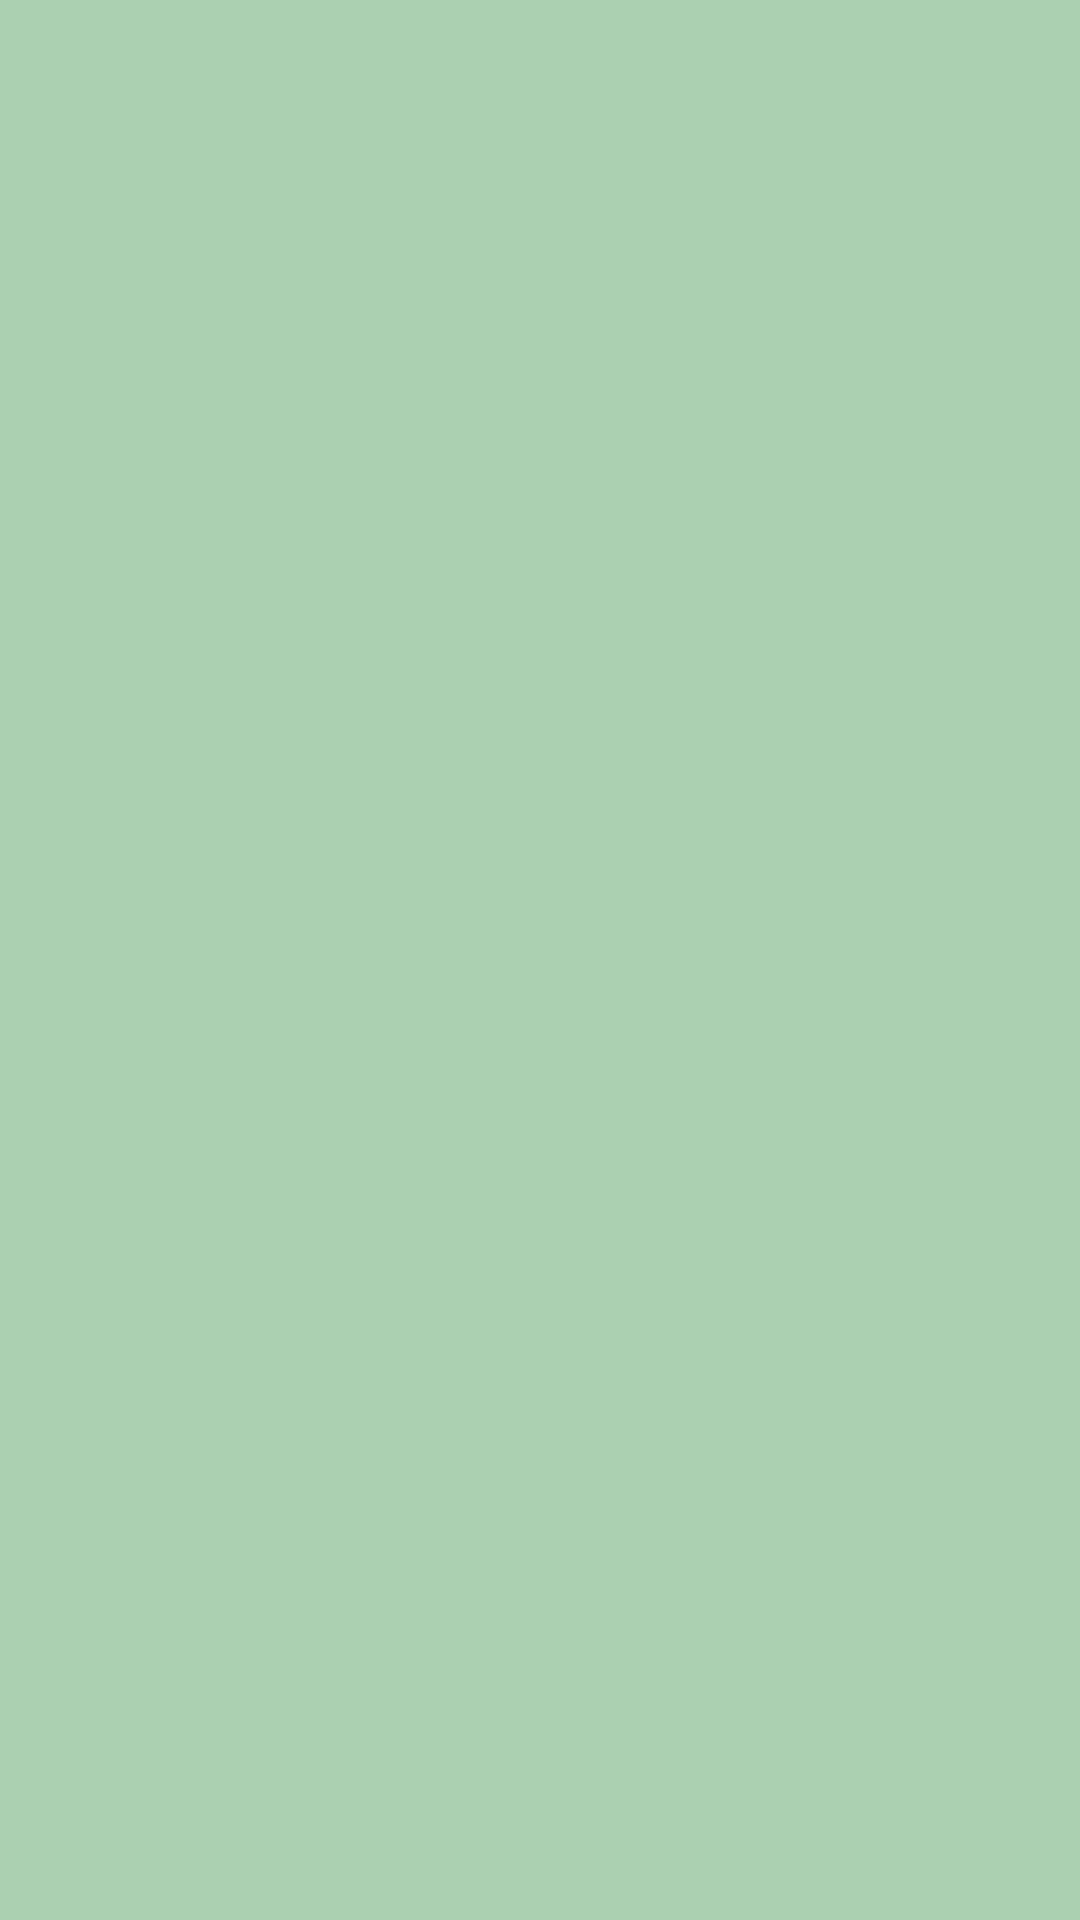 Plain Mint Green Phone Wallpaper